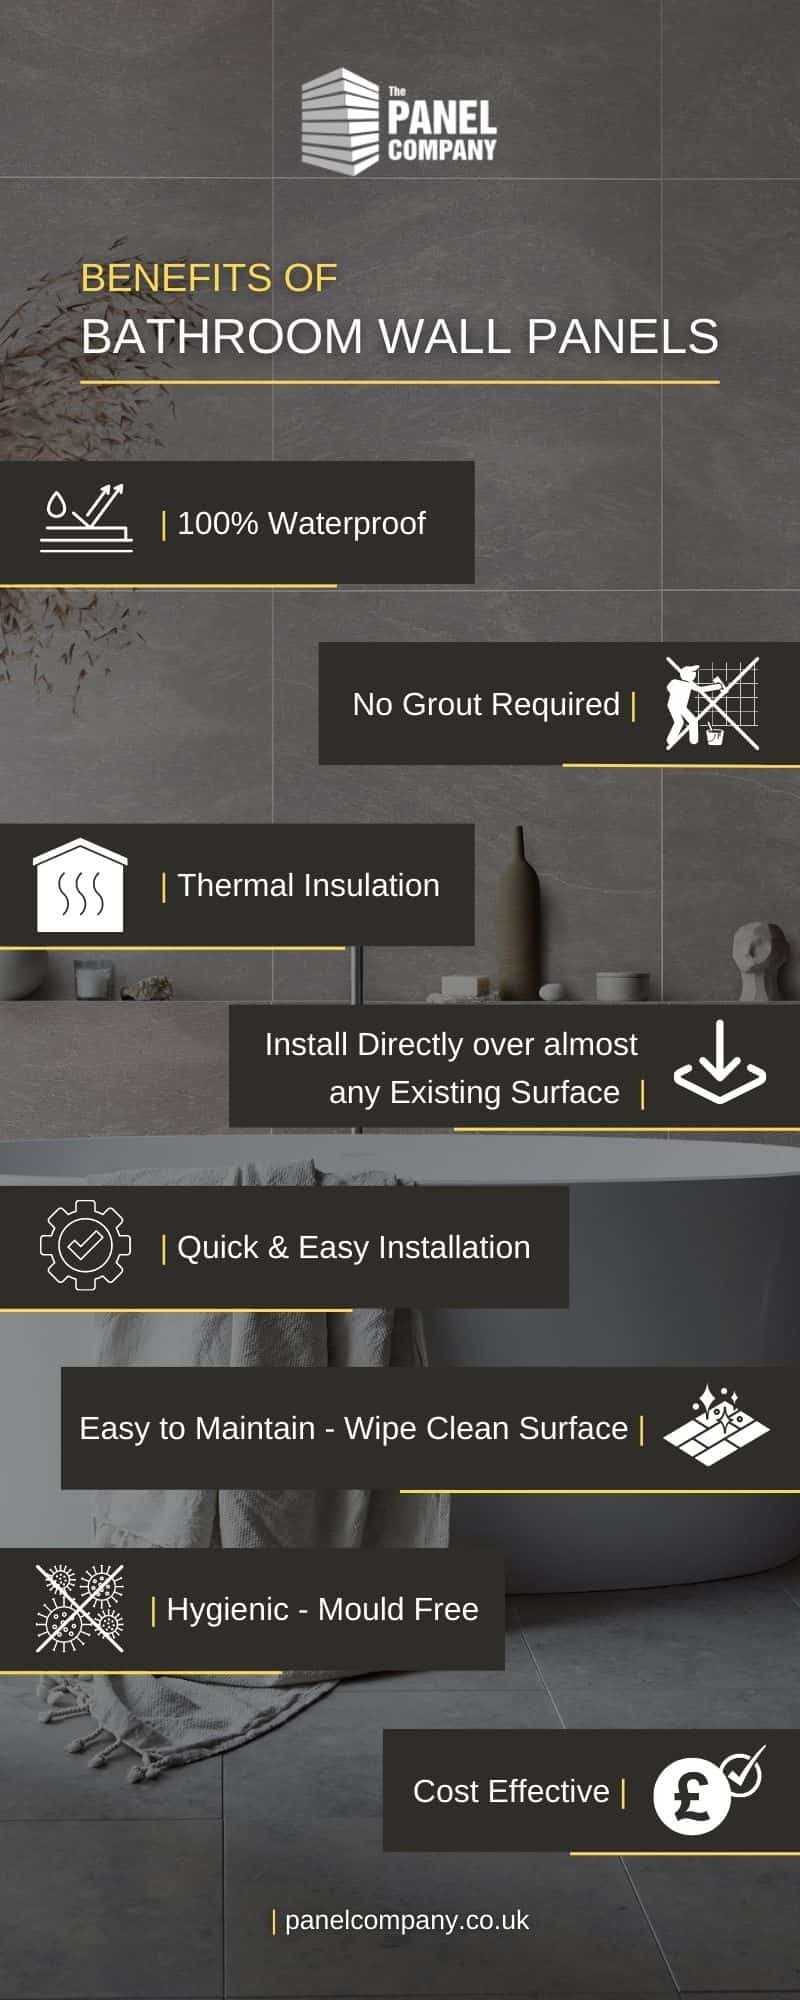 benefits of bathroom wall panels infographic